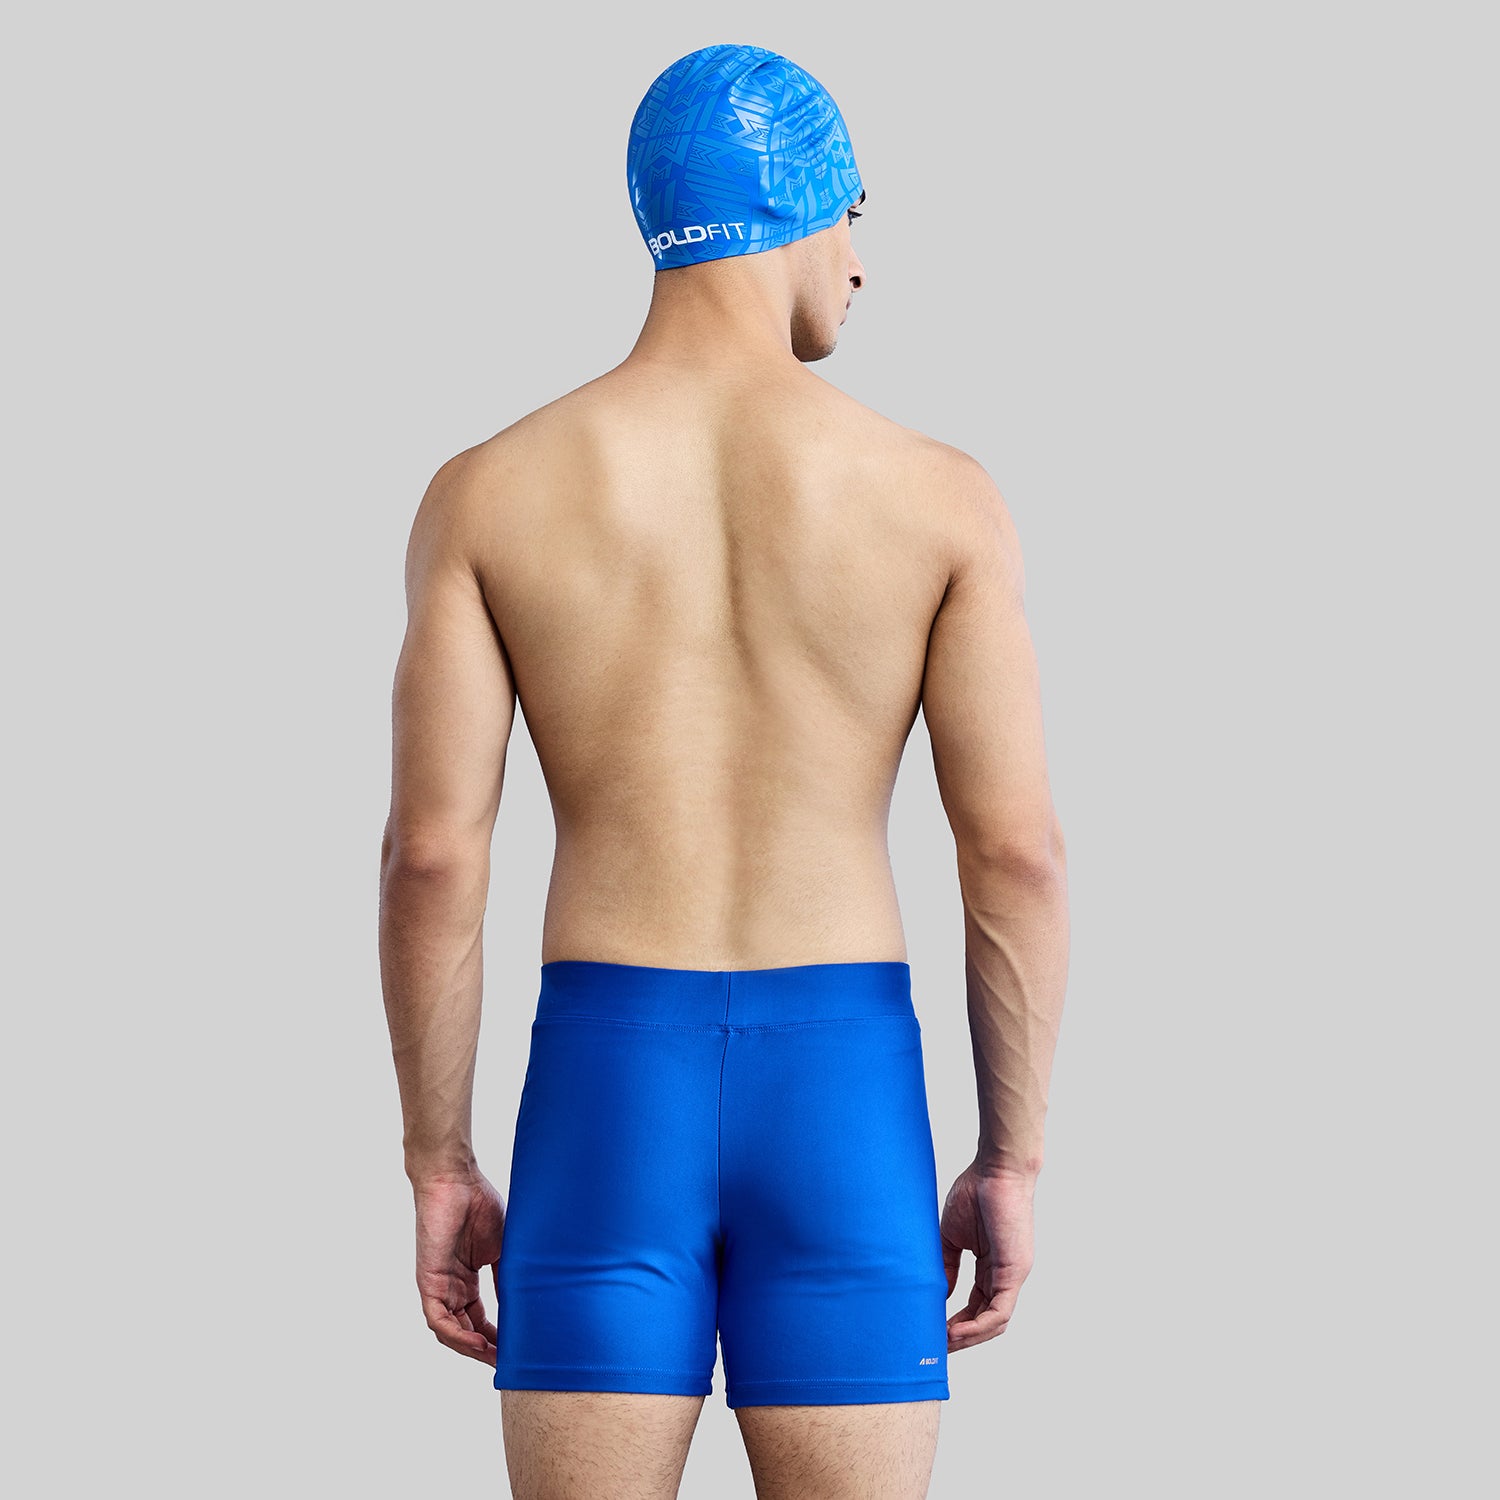 Official MI Merch - Men's Swim Shorts